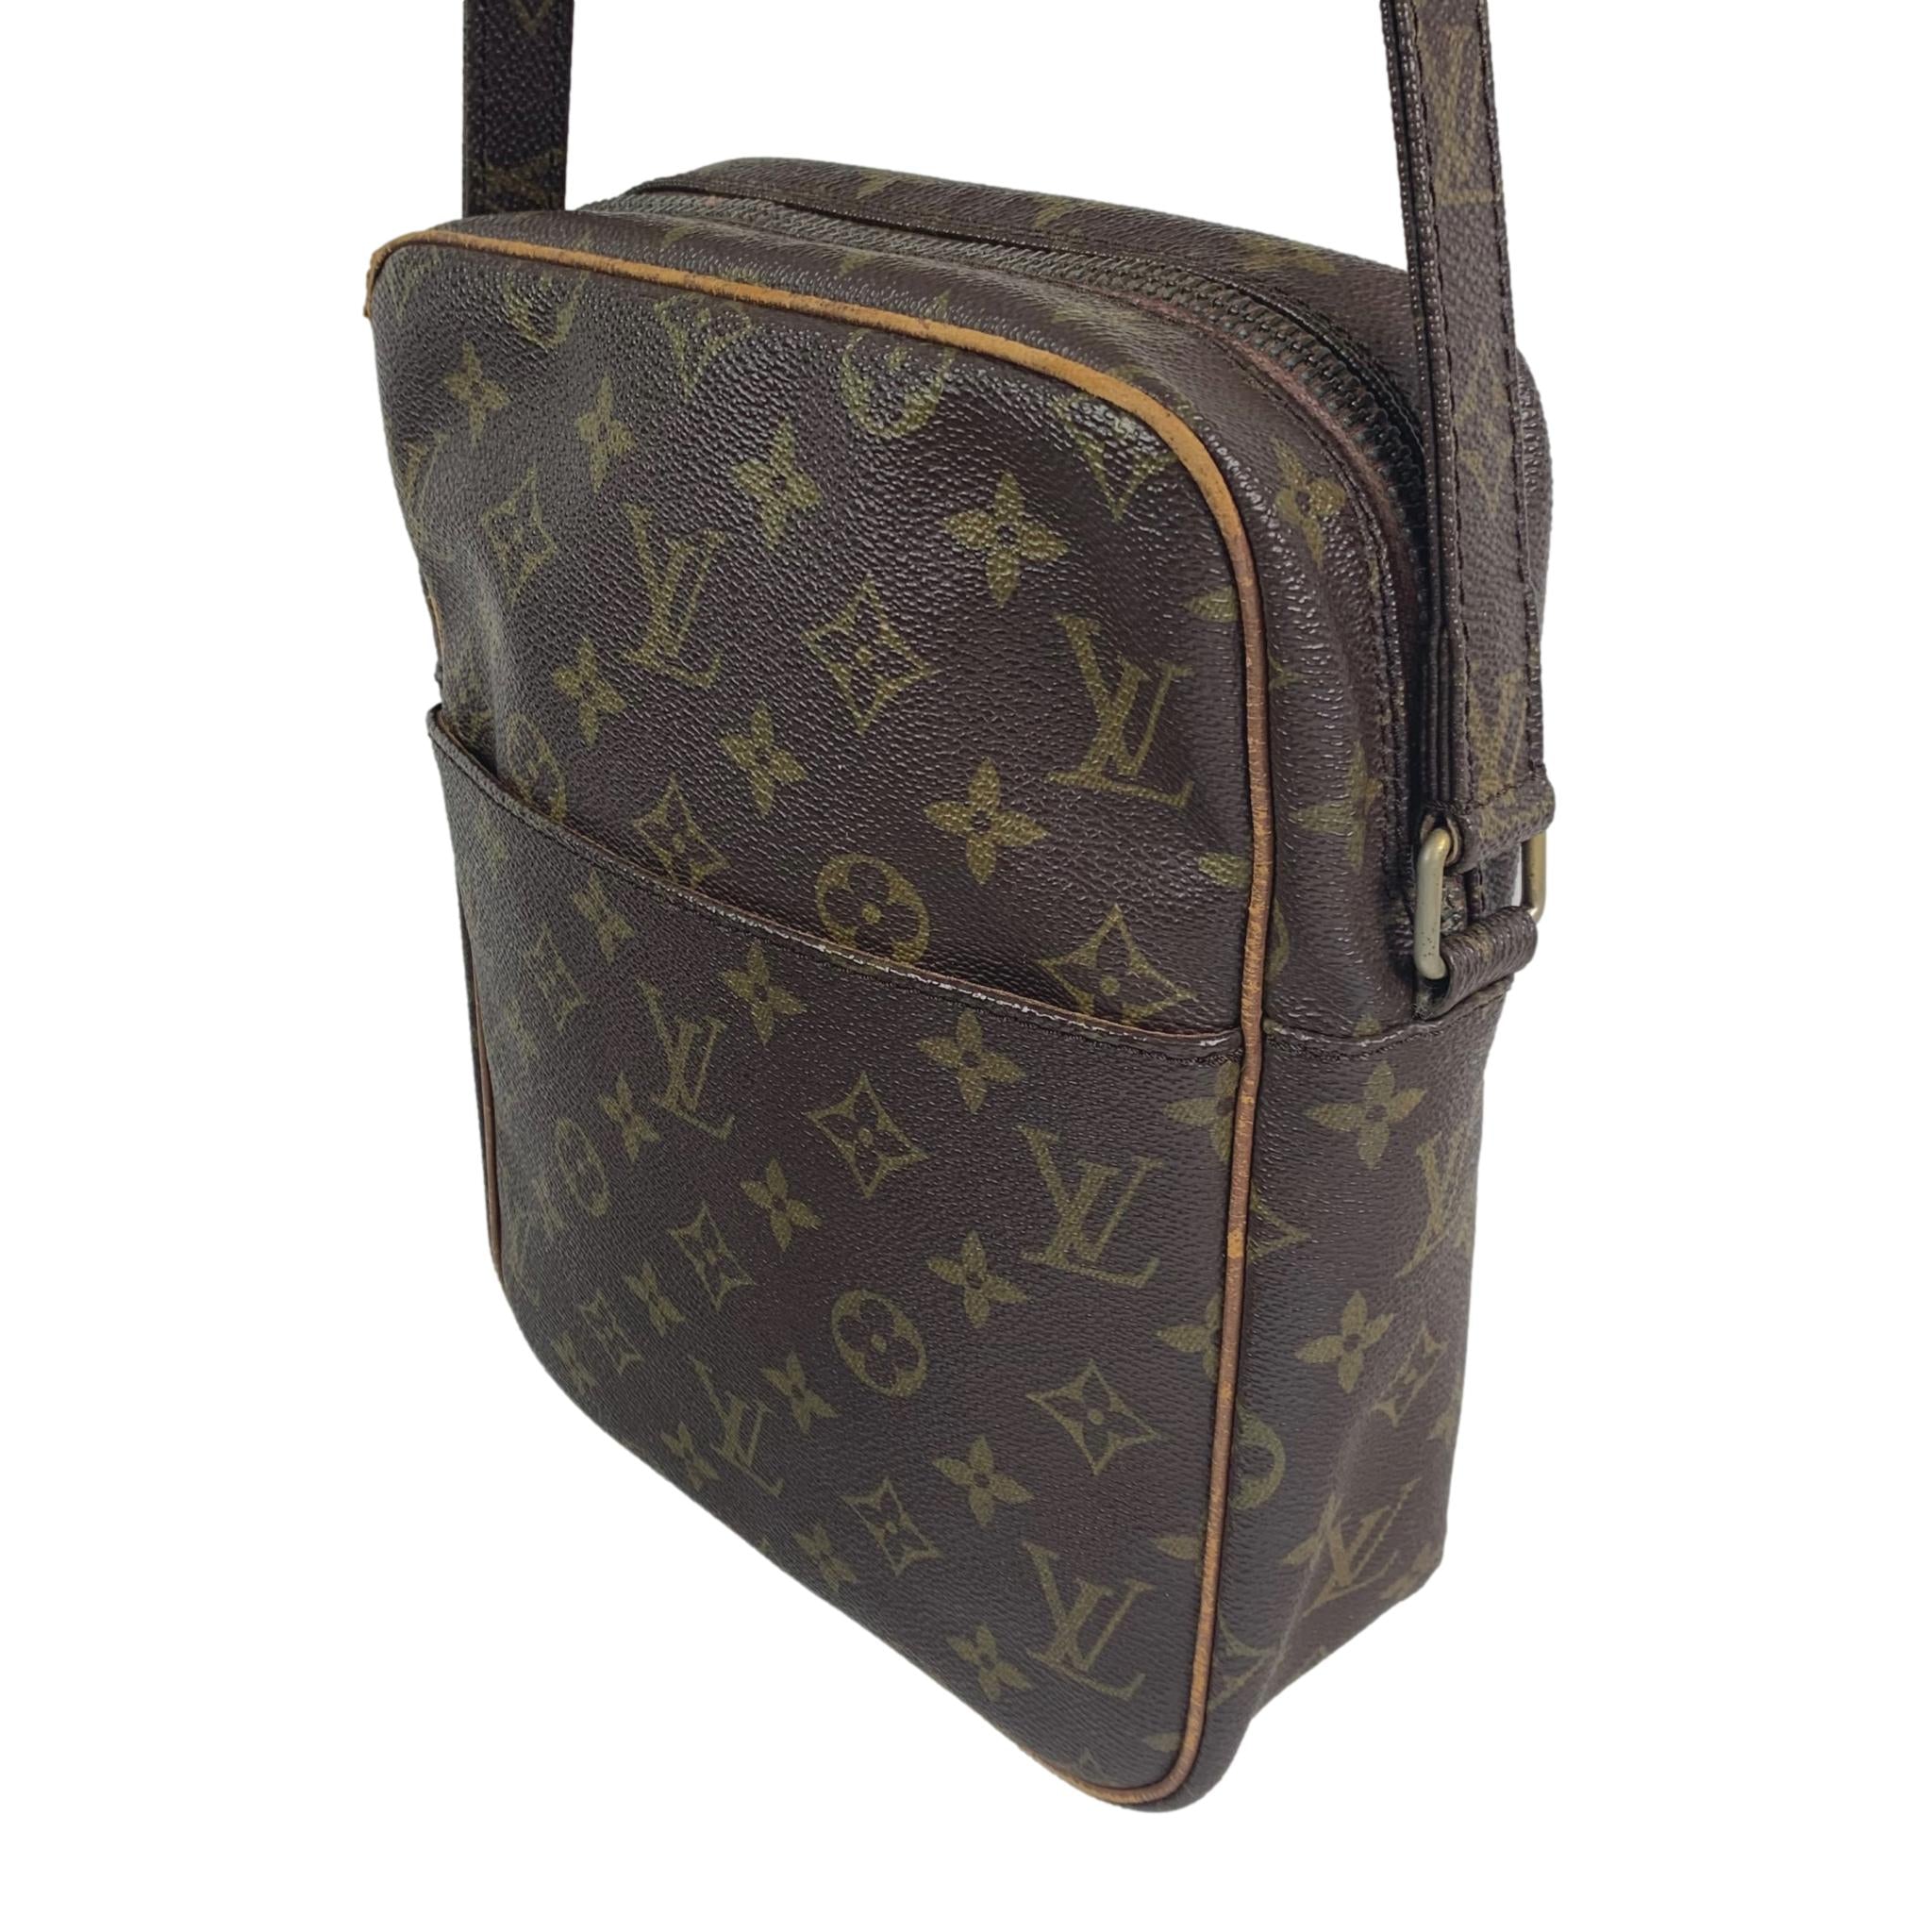 Vintage Louis Vuitton luxury bag model Tivoli PM